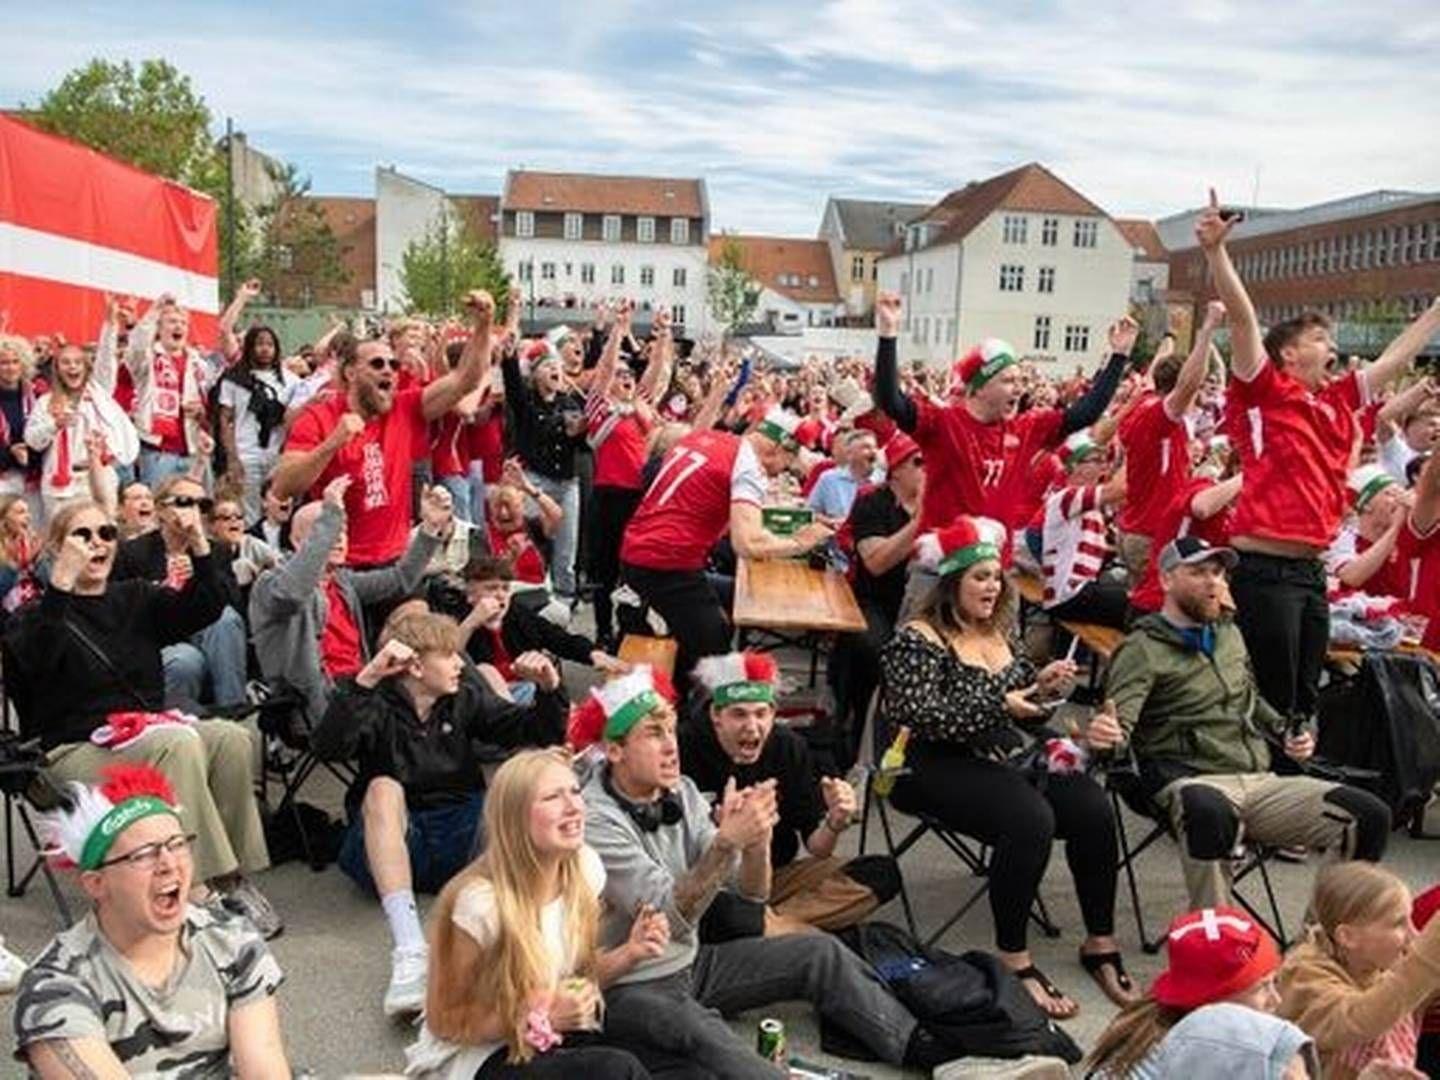 Danmark spiller lørdag ottendedelsfinale ved EM i fodbold mod Tyskland. | Photo: Søren Gylling/Jyskfynskemedier/Ritzau Scanpix/TV 2